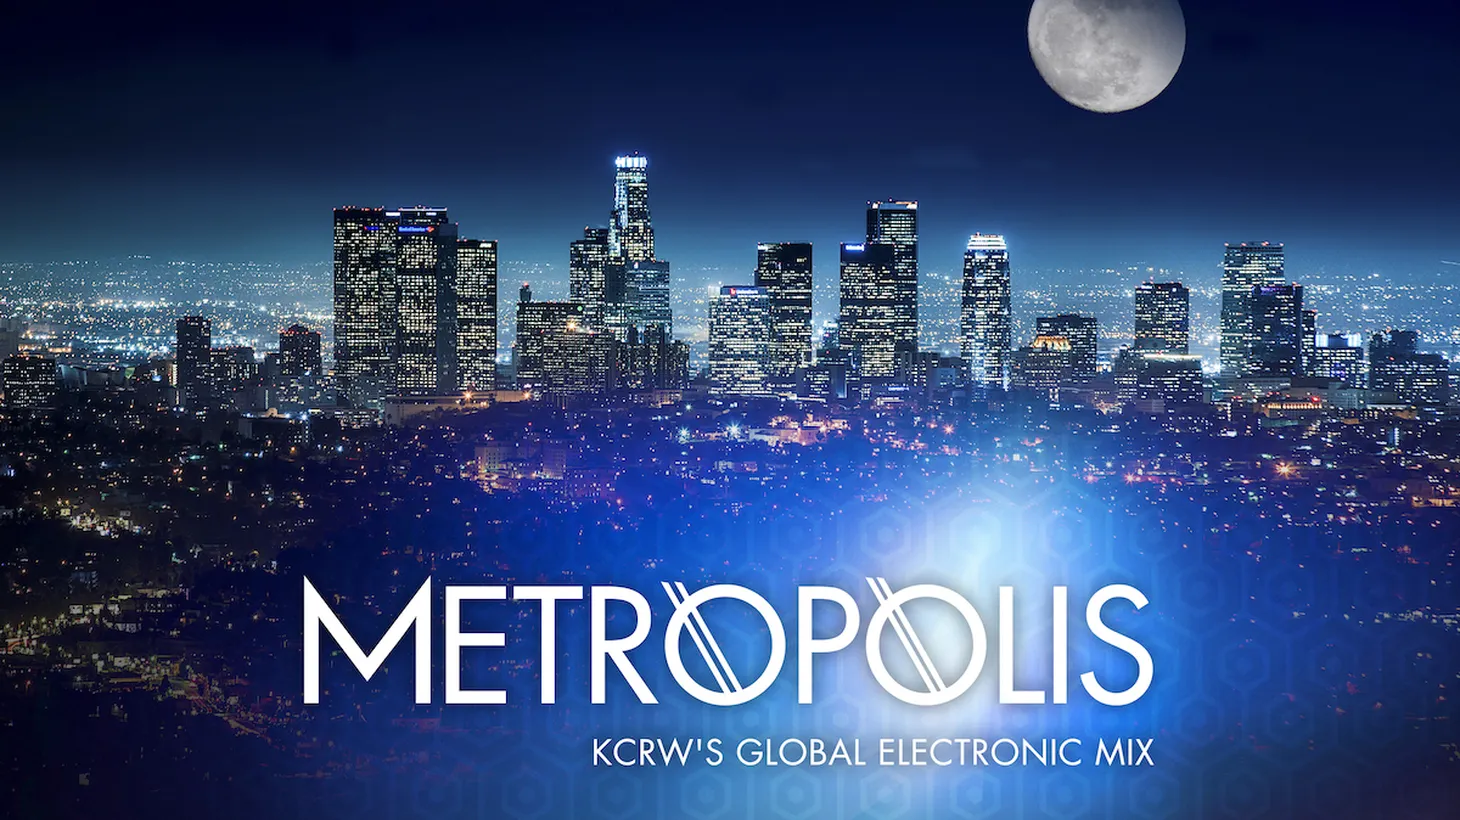 Metropolis playlist, June 11, 2022.